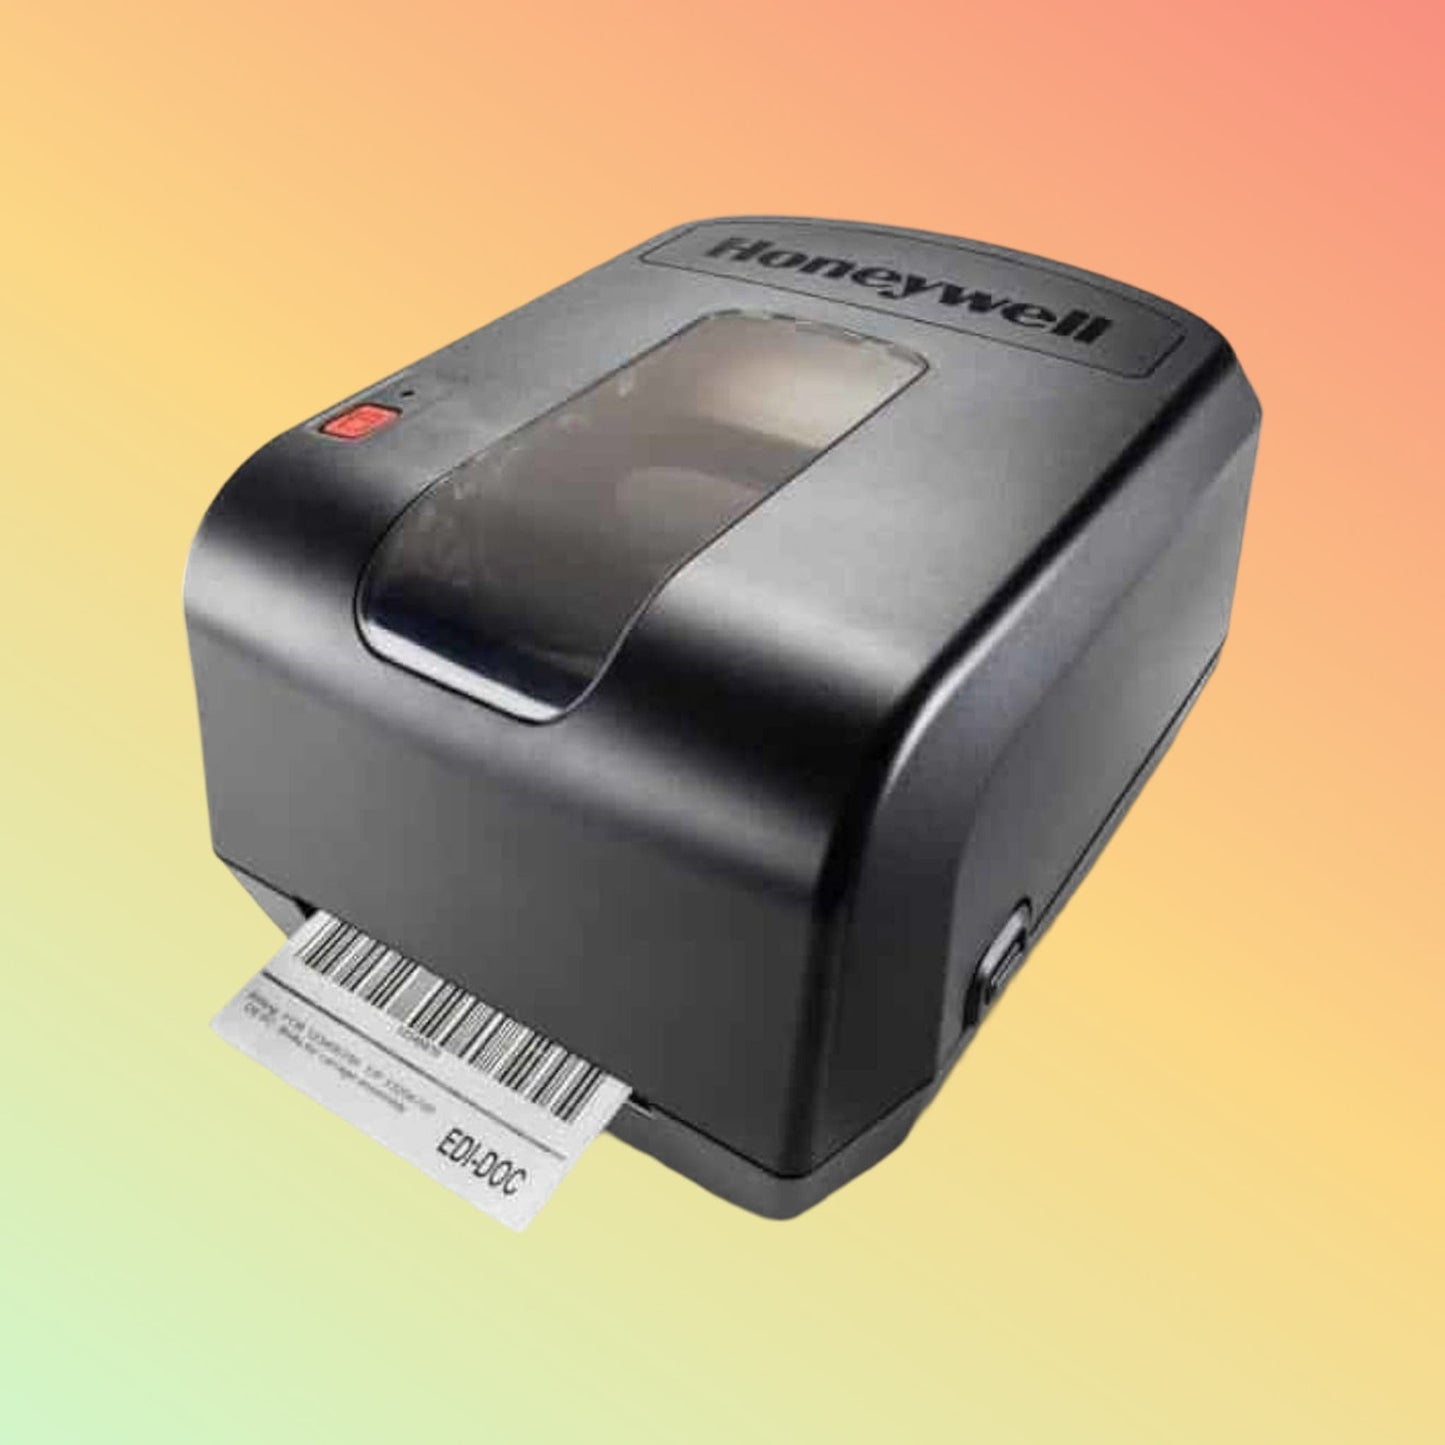 Honeywell PC42T Plus Thermal Transfer Barcode Printer - Neotech